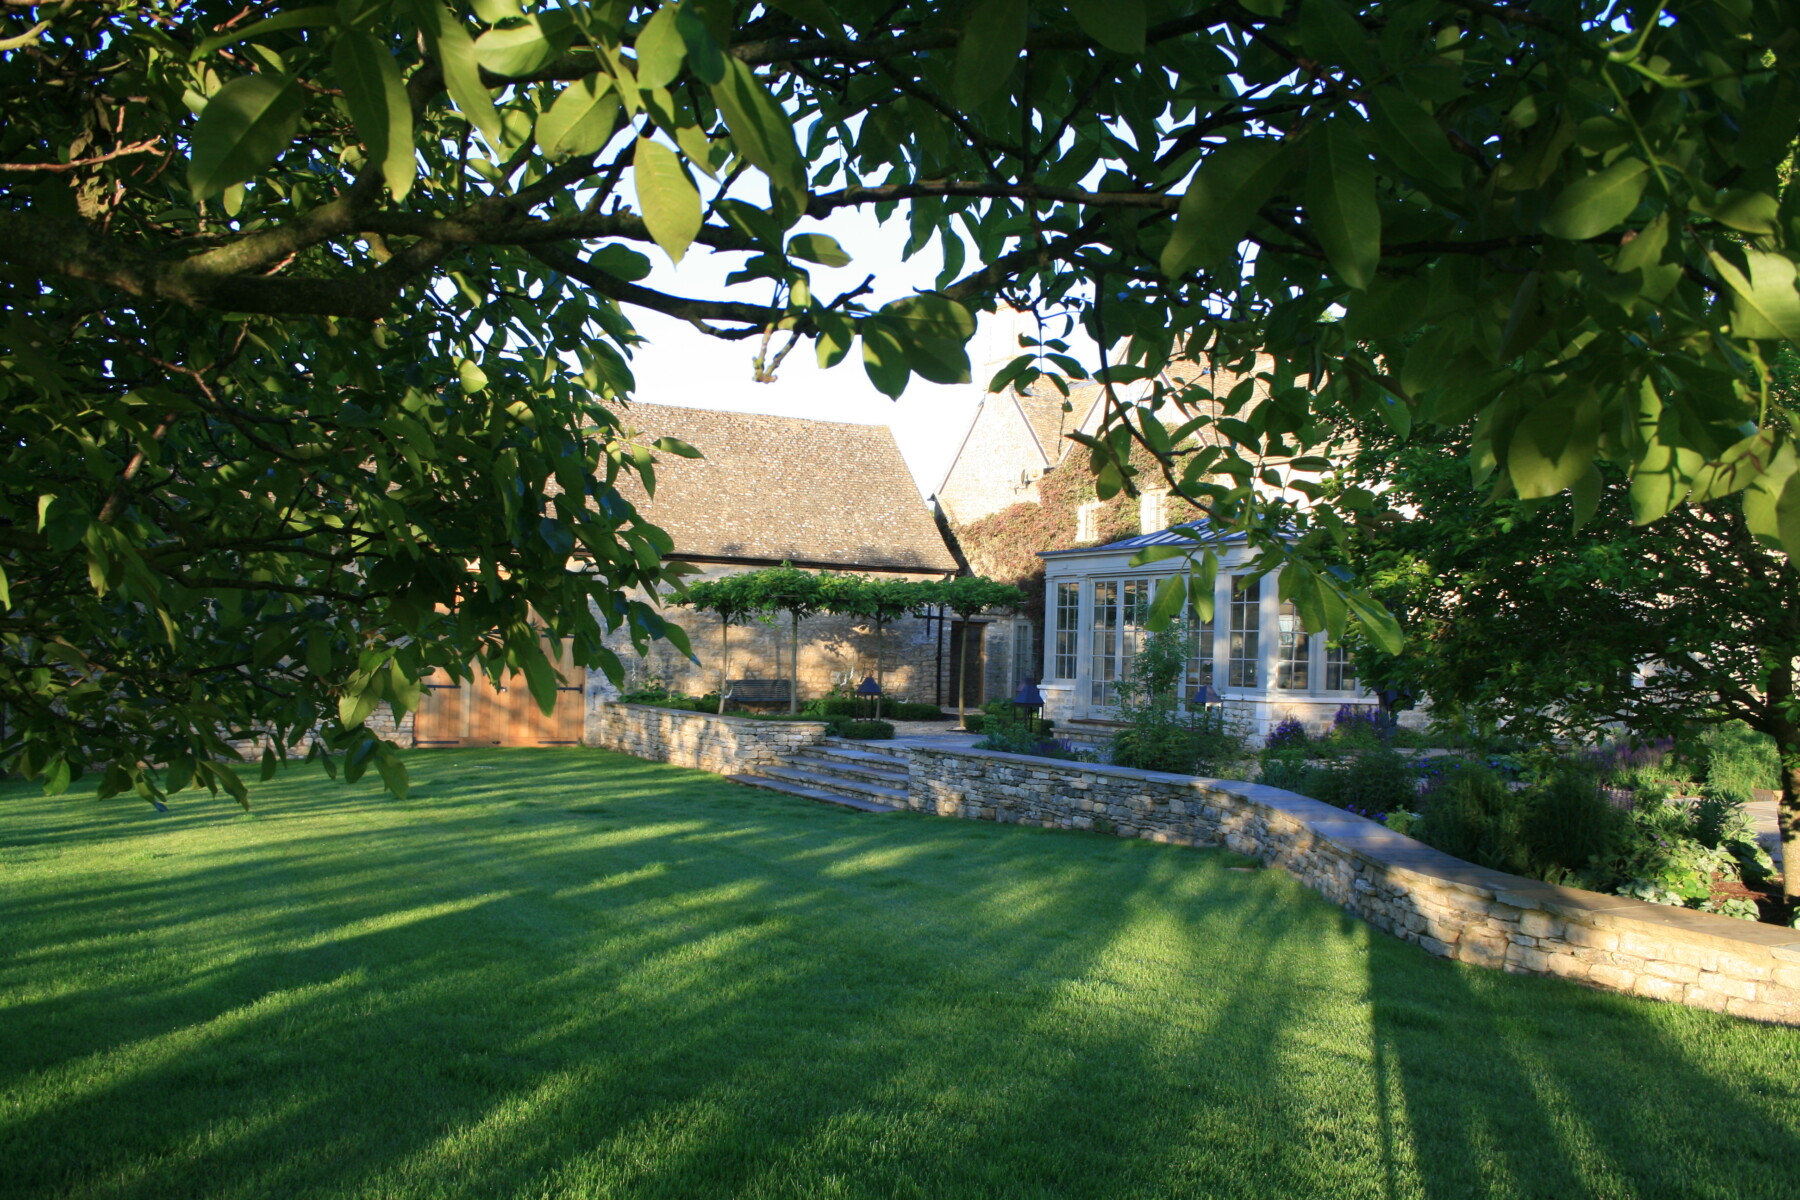 The Tranquil Farmhouse